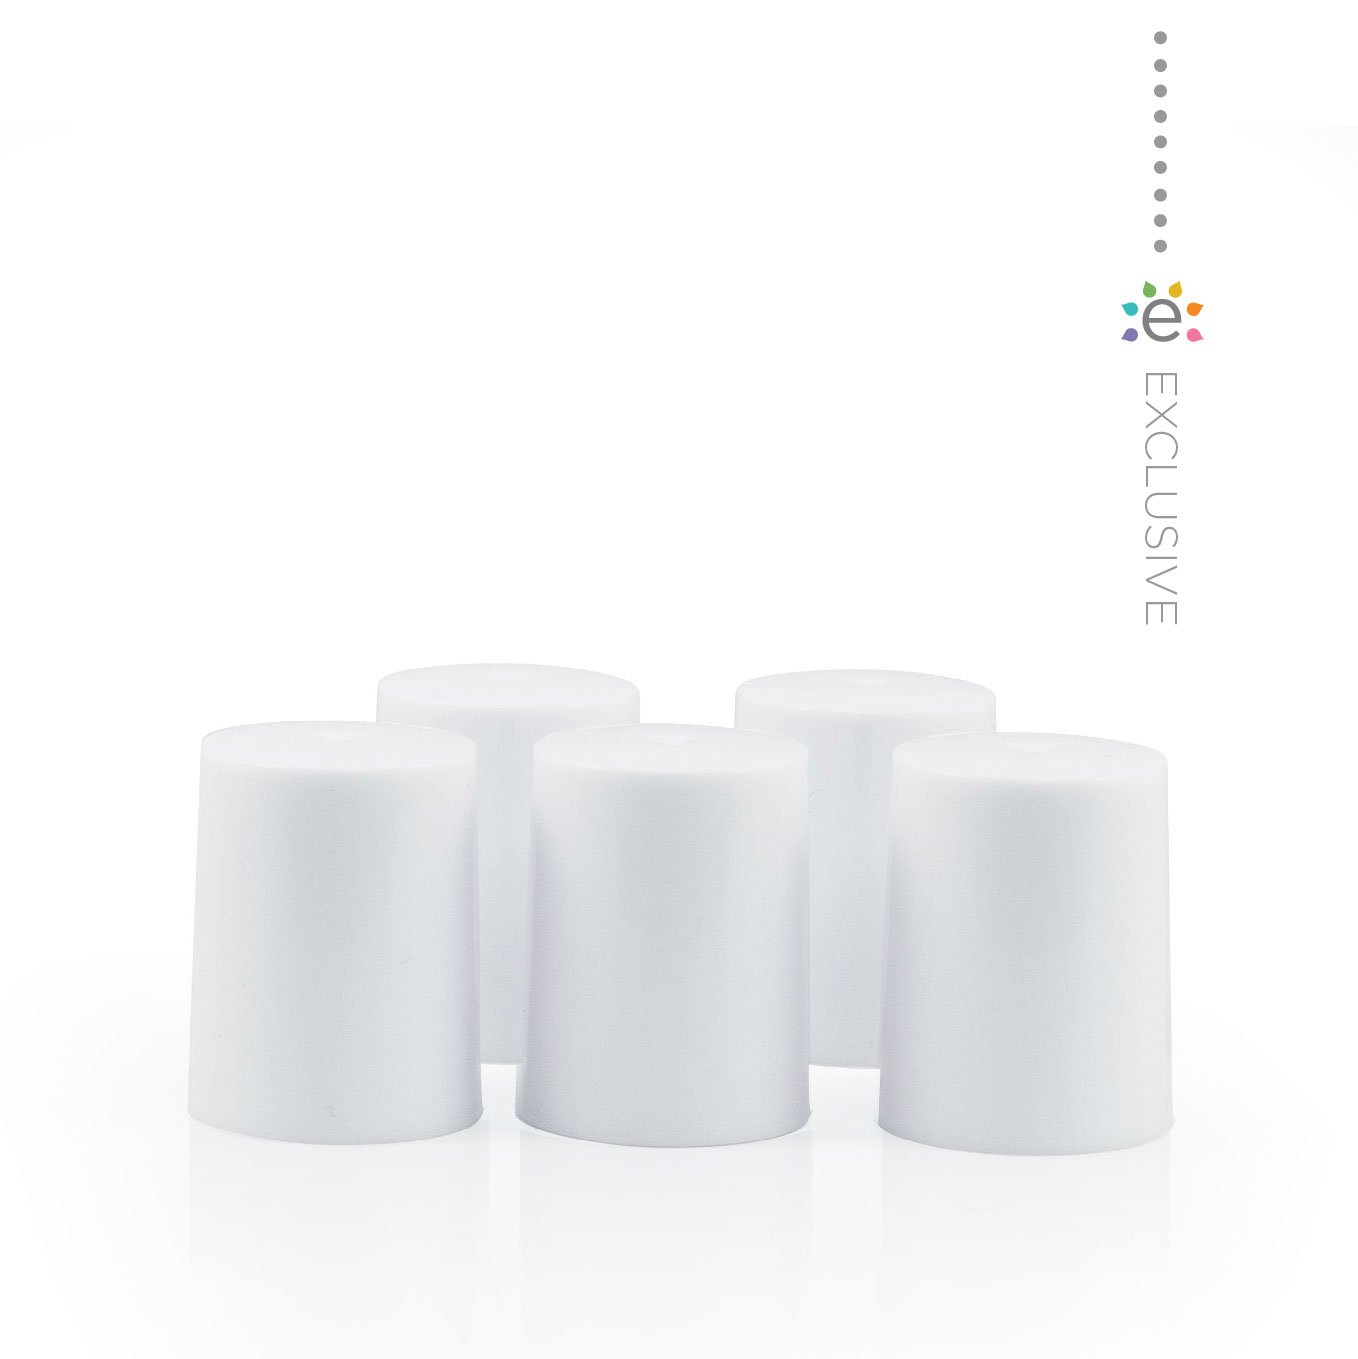 Műanyag kupakok (5 darab) Roll-on üveghengerhez ,Hófehér színben